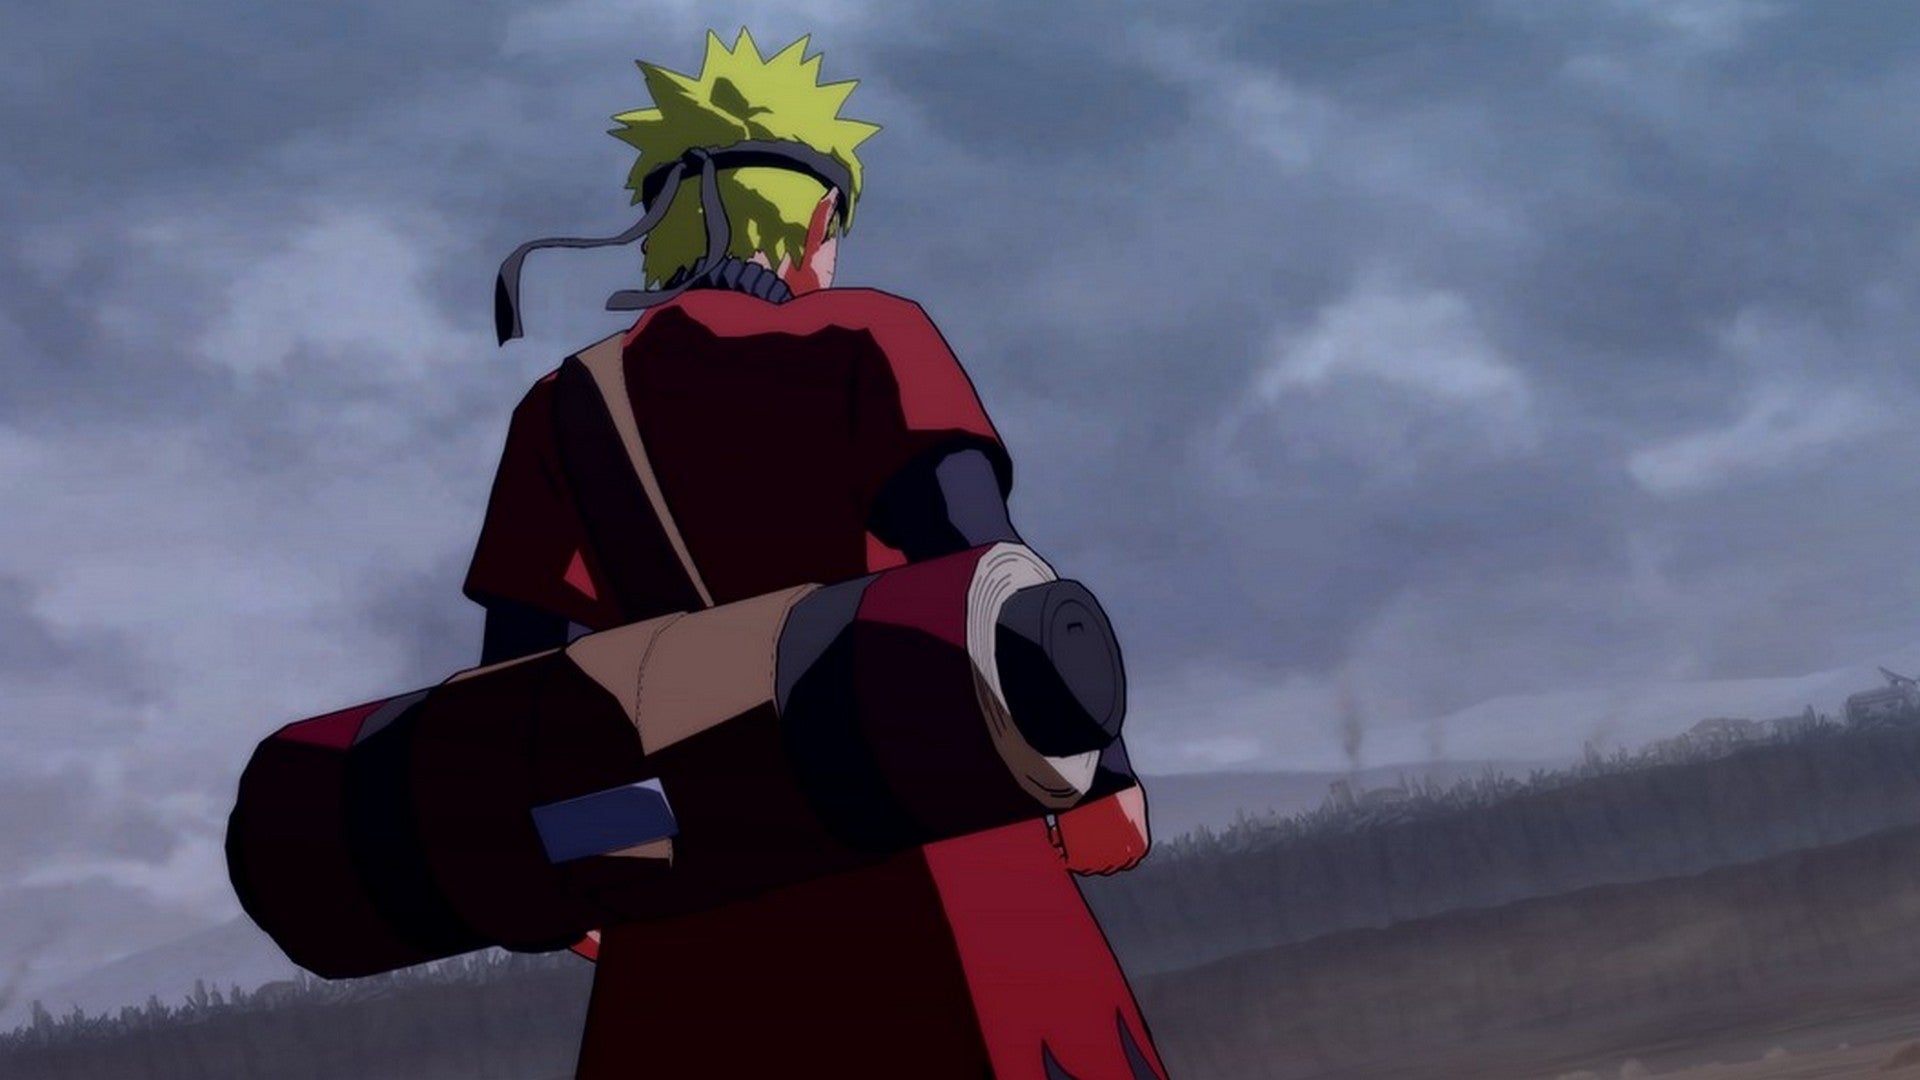 Naruto X Boruto Ultimate Ninja Storm Connections angekündigt - Wann erscheint es?